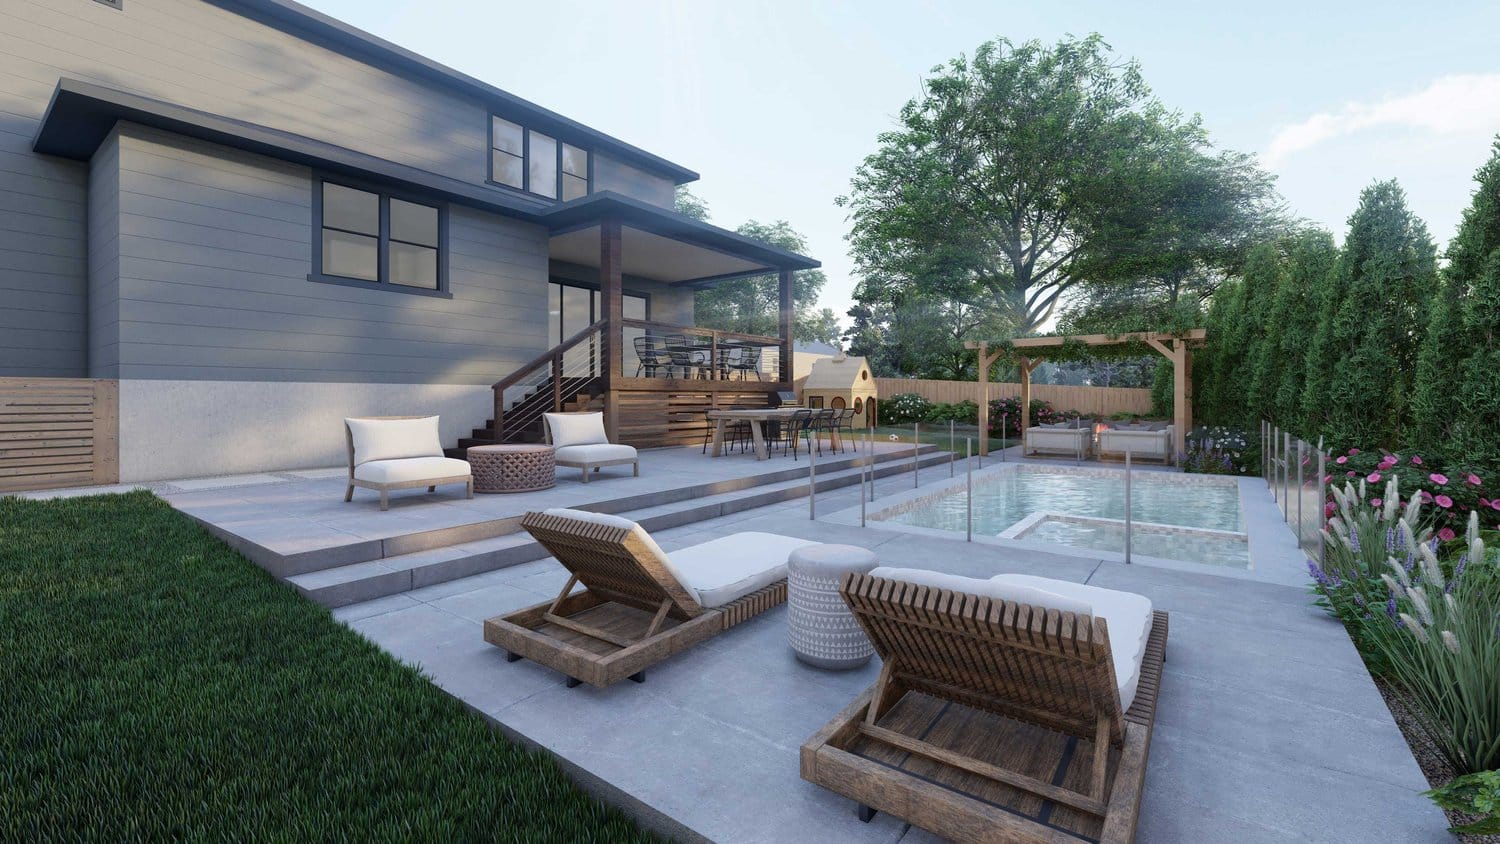 Charlotte concrete paver backyard pool area with furniture sets